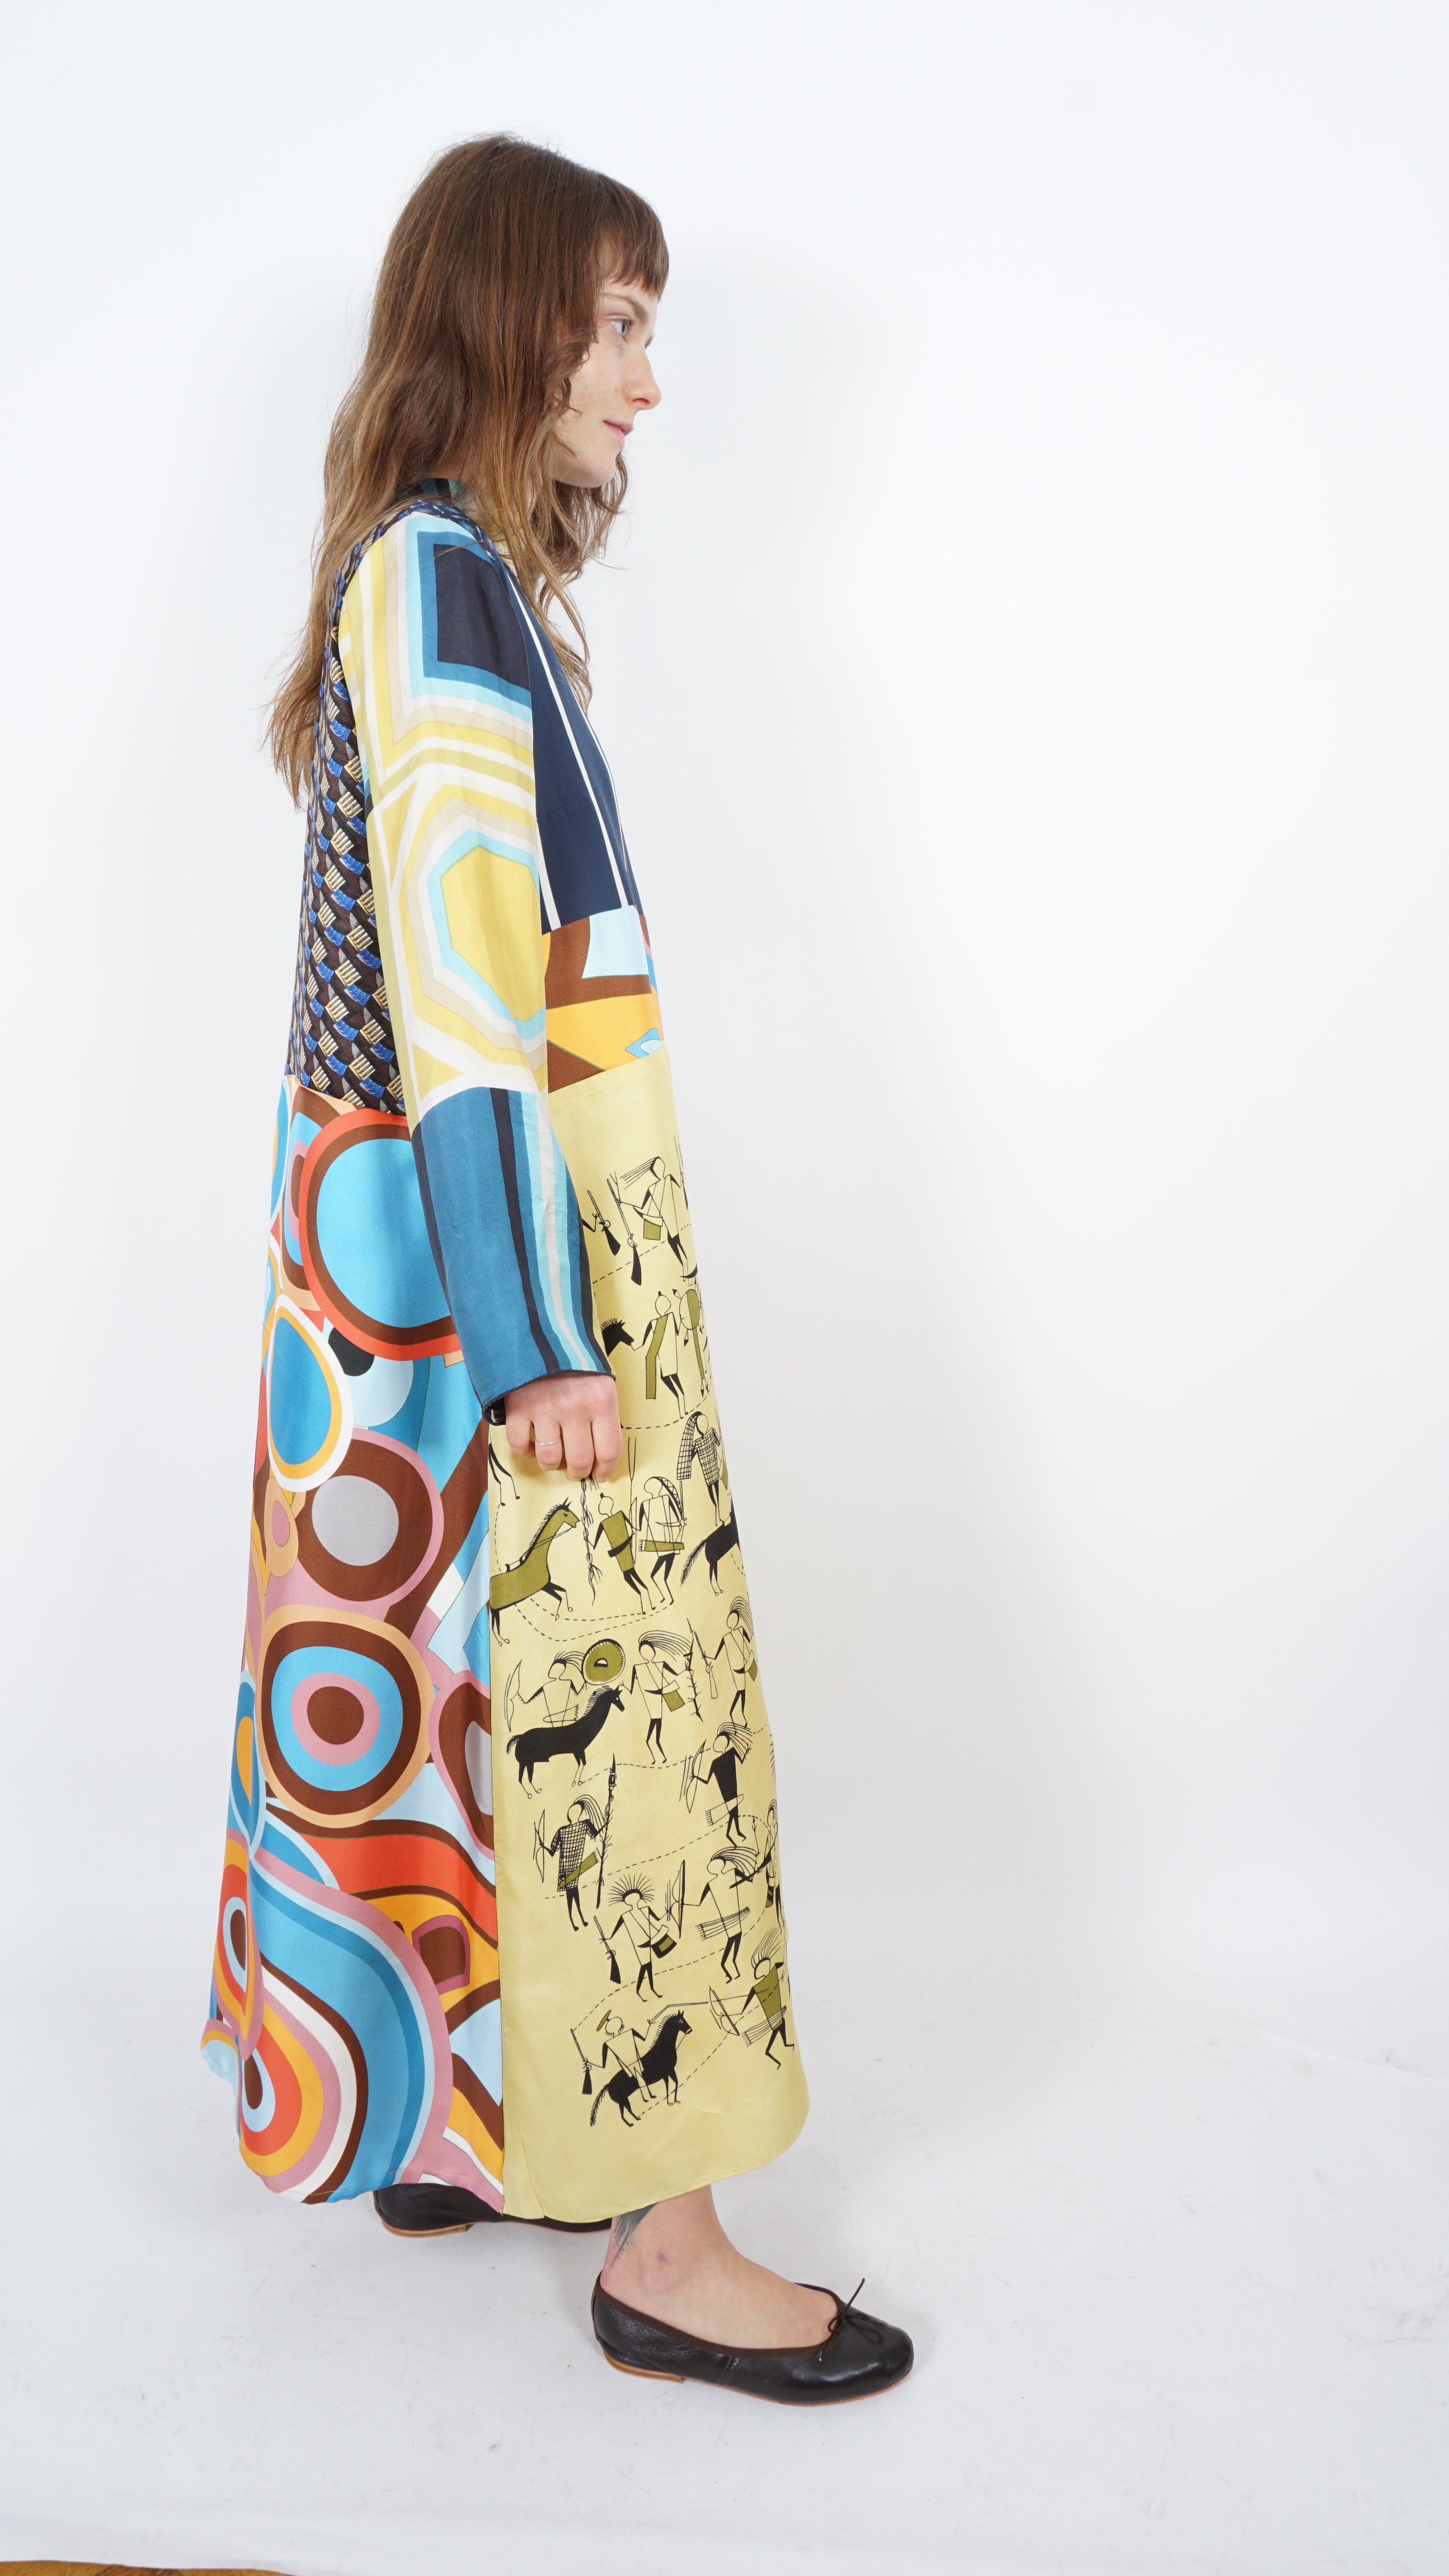 Sonyia silk dress by Bettina Bakdal